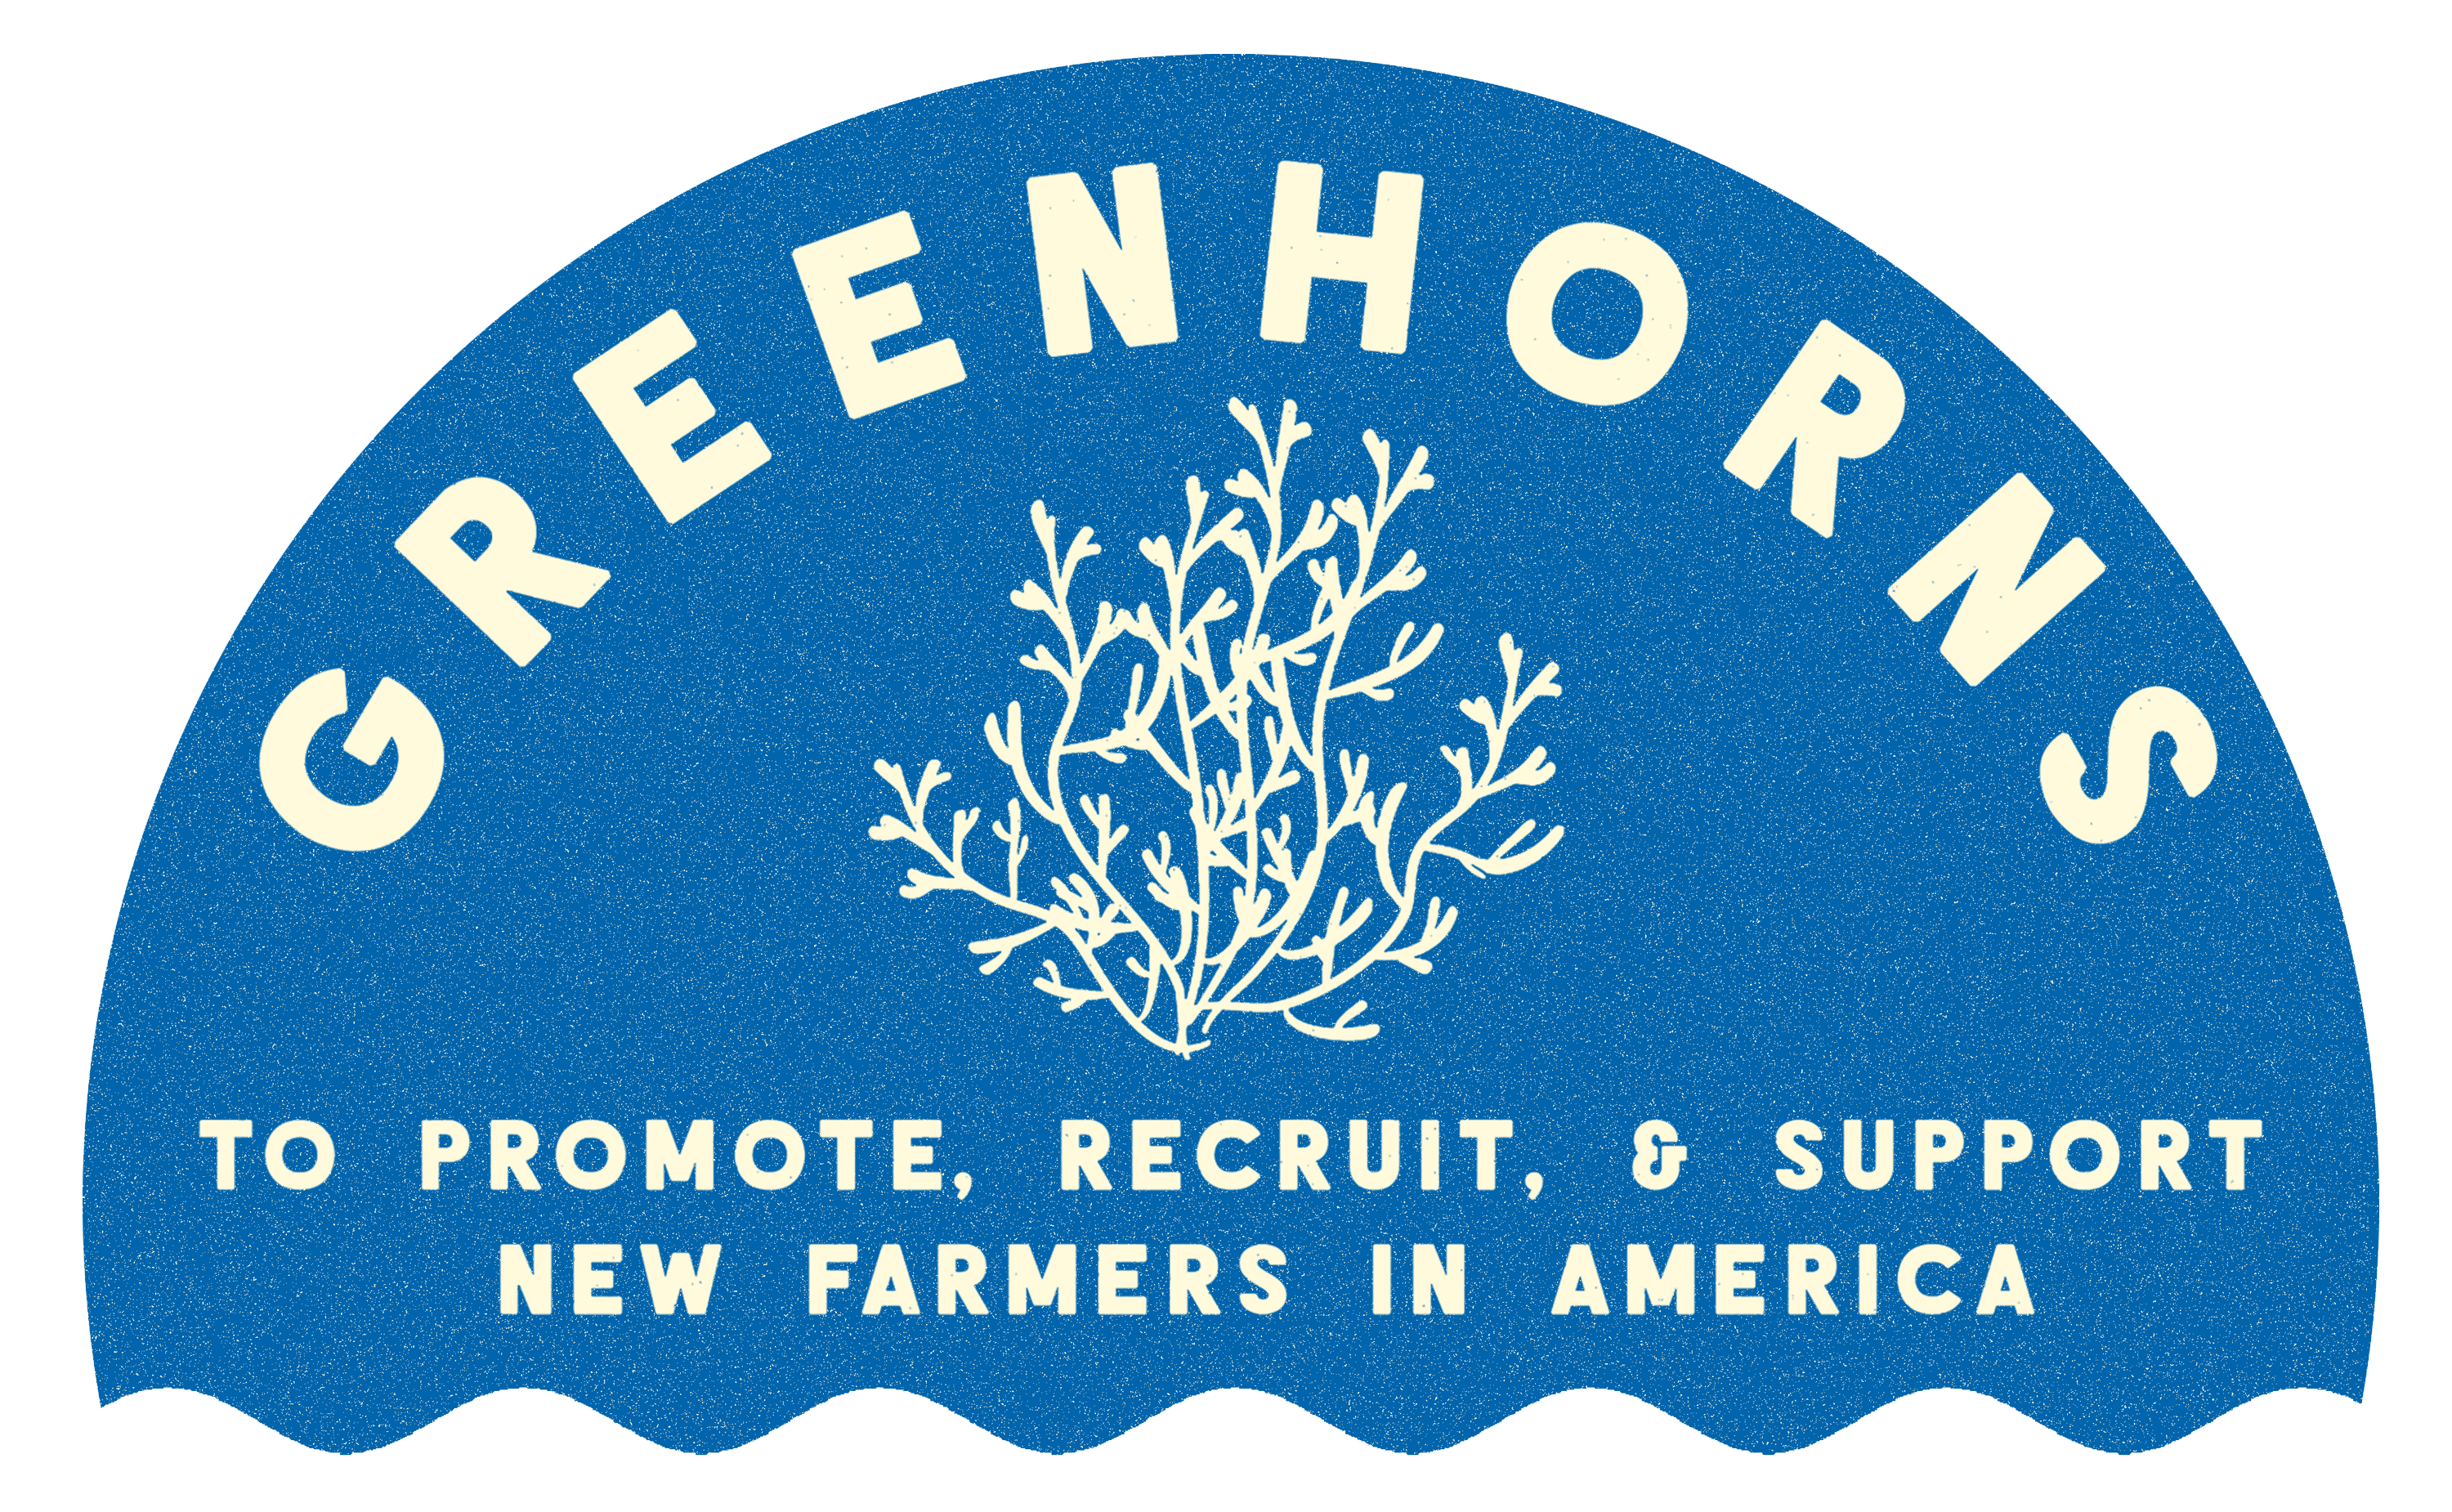 Greenhorns/Smithereen Farm